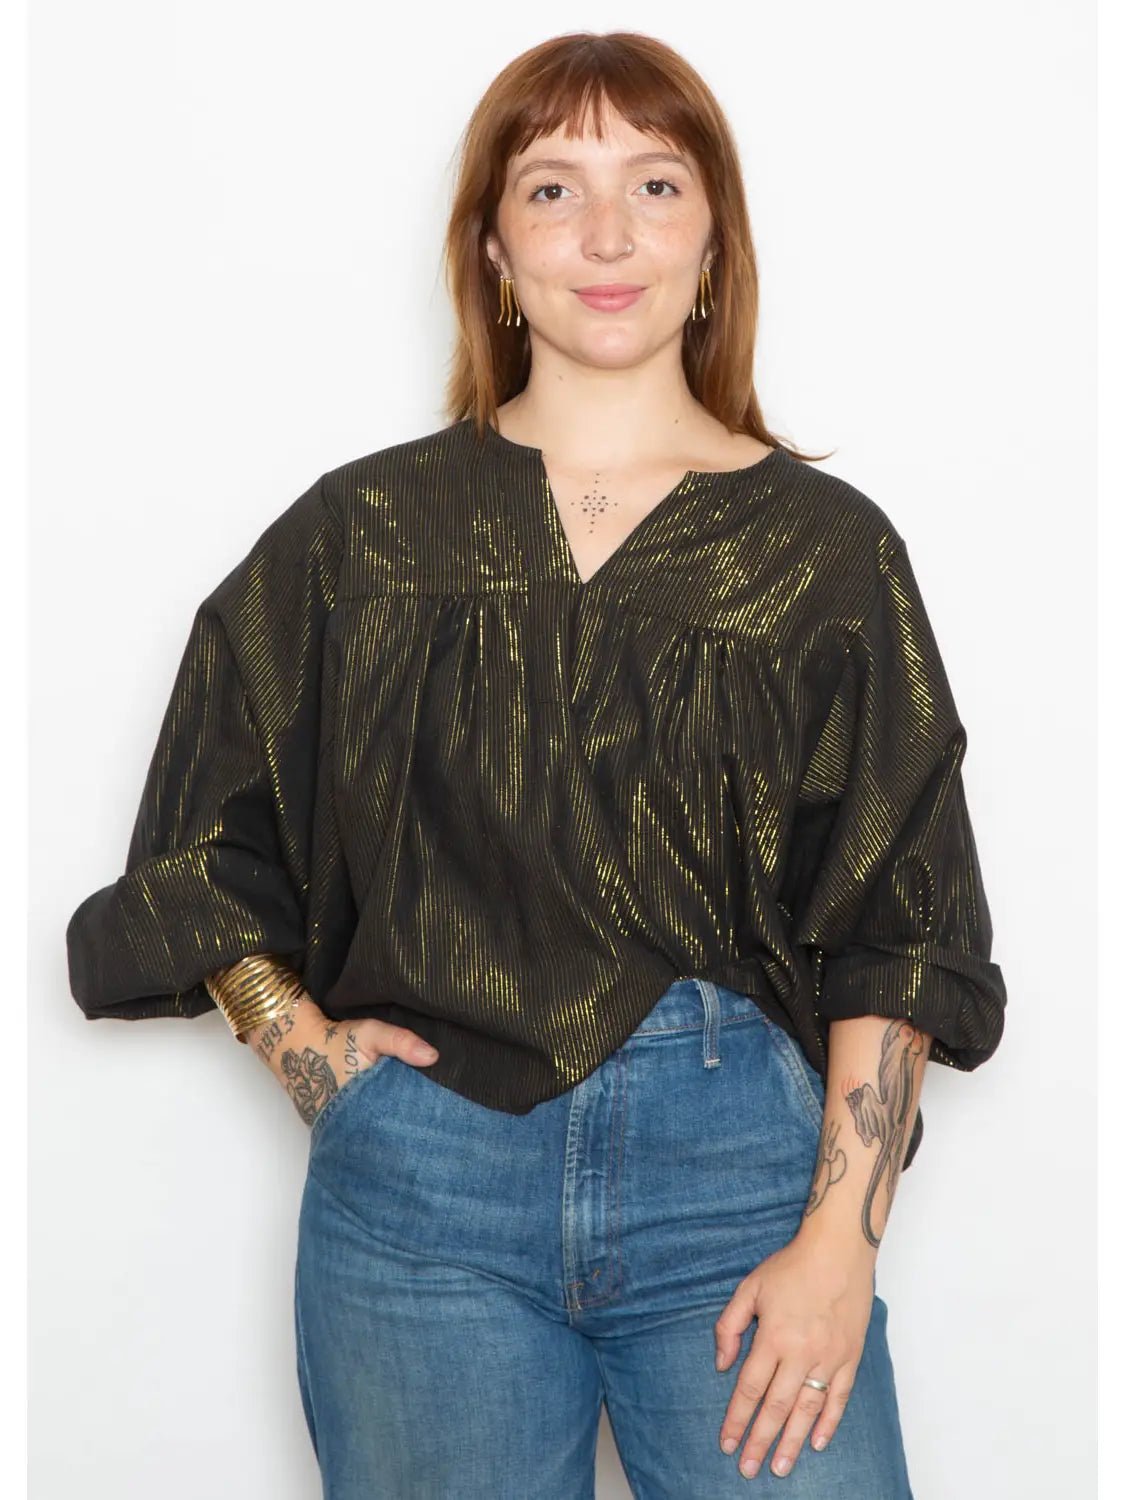 Beach Day Shirt- Black/ Gold StripeGood CompanyShirt